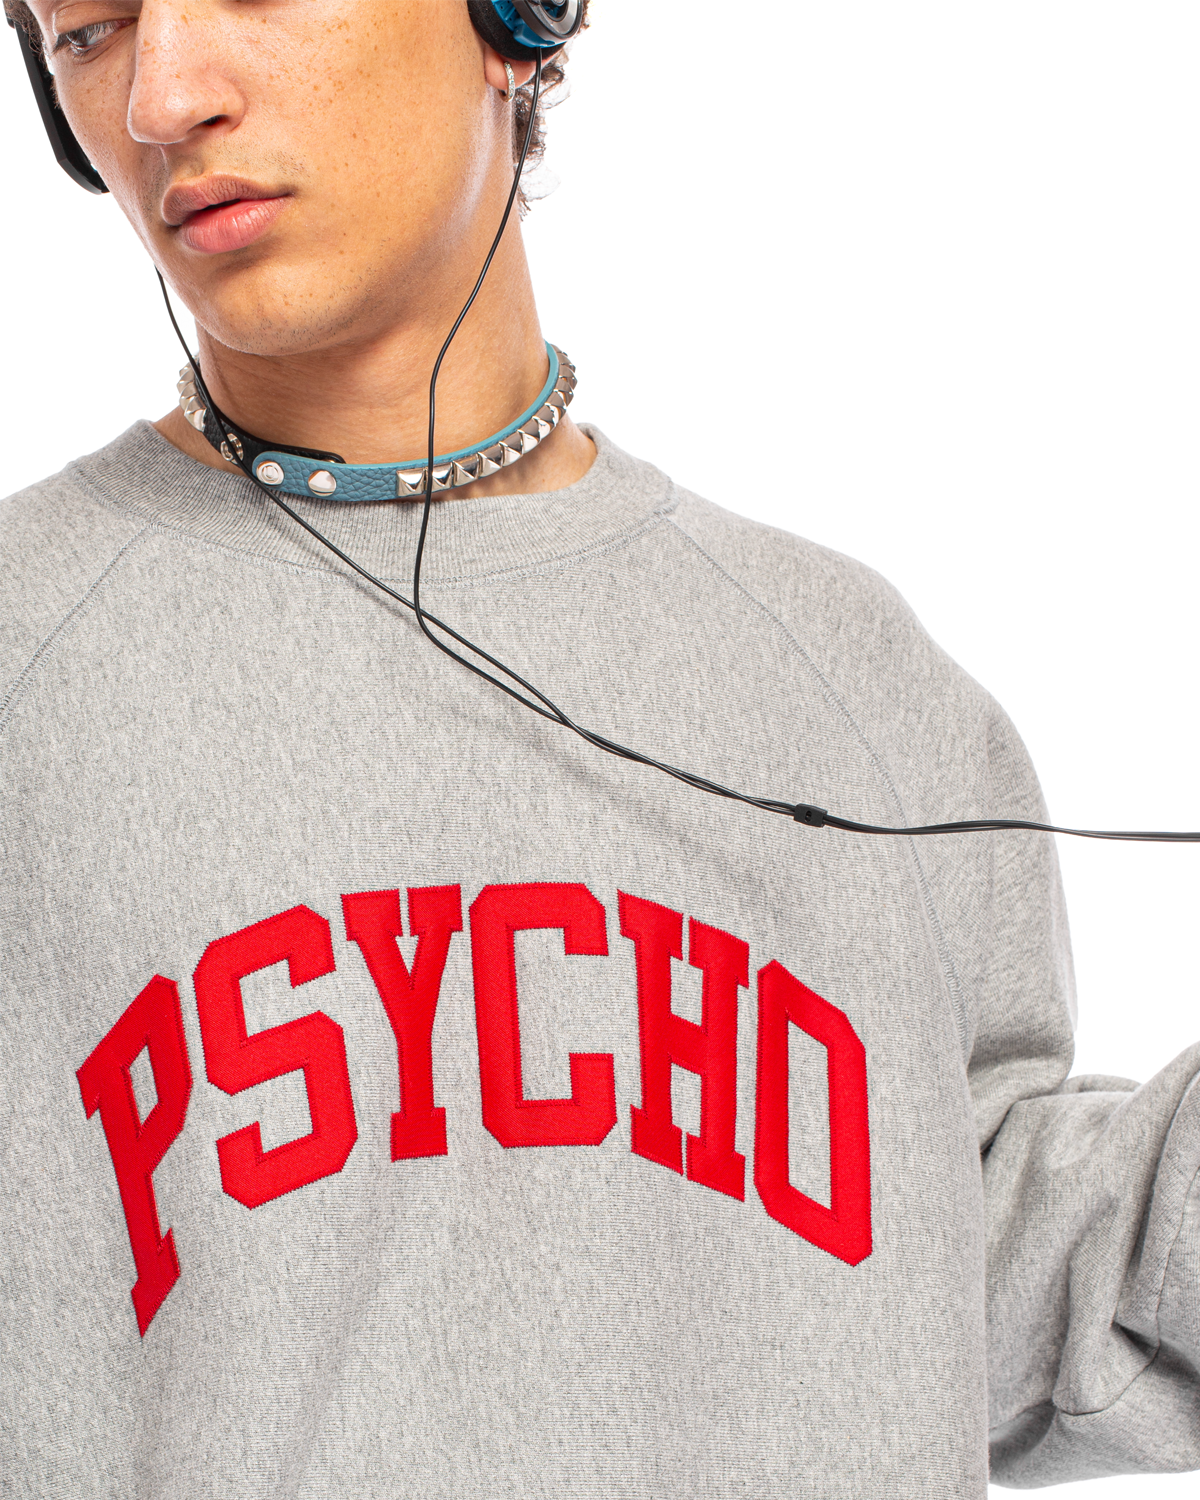 UC2B4801-3 Psycho Sweatshirt Gray